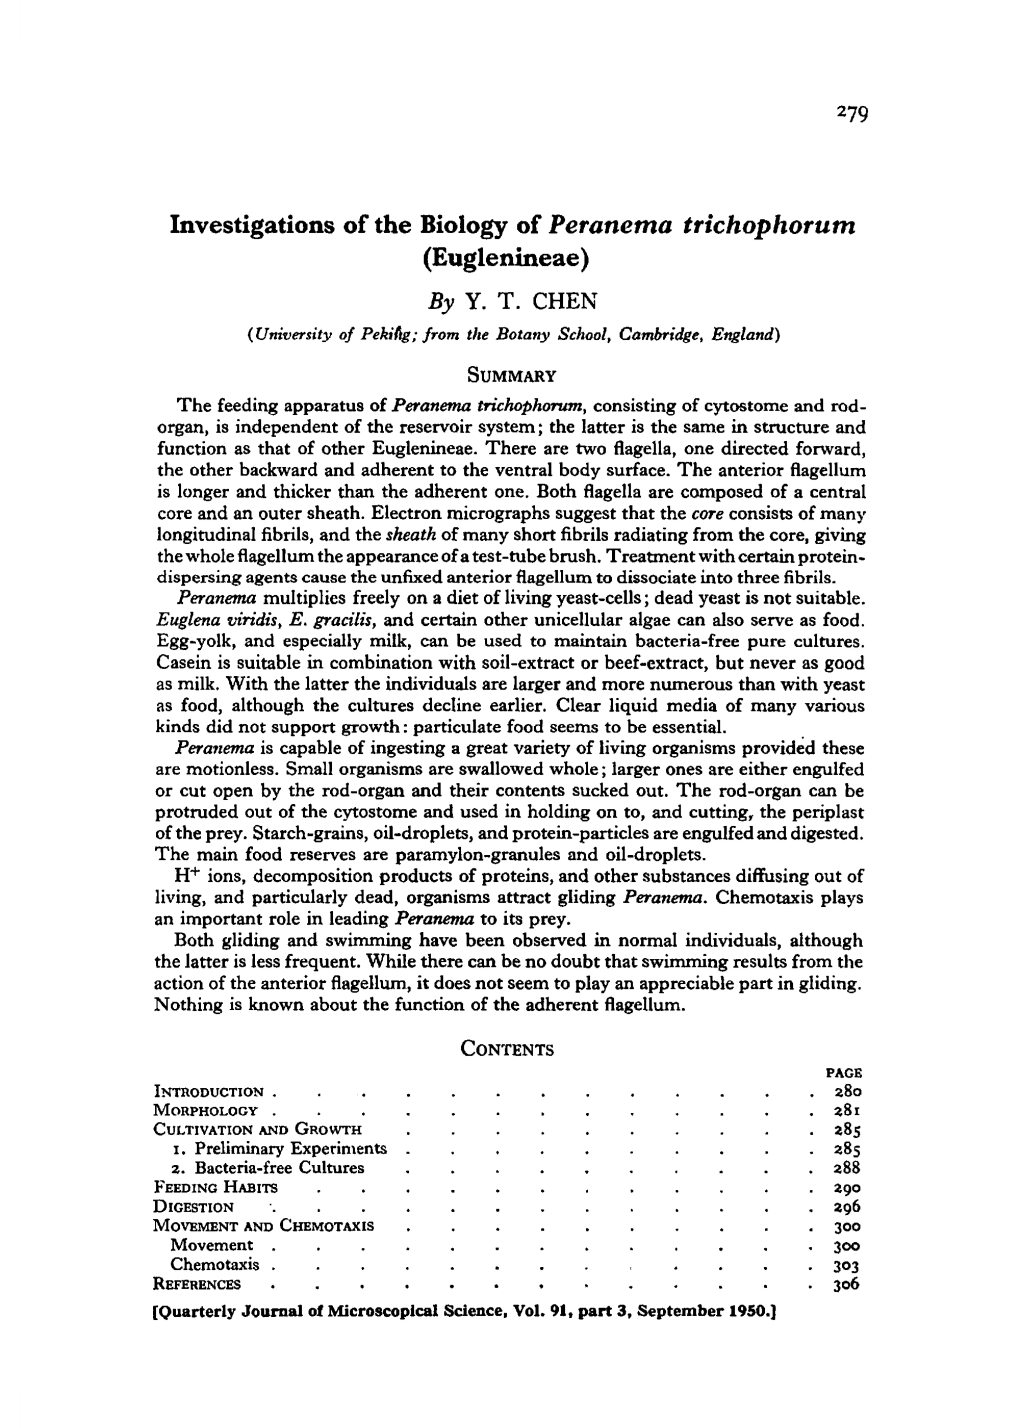 Investigations of the Biology of Peranema Trichophorum (Euglenineae) by Y